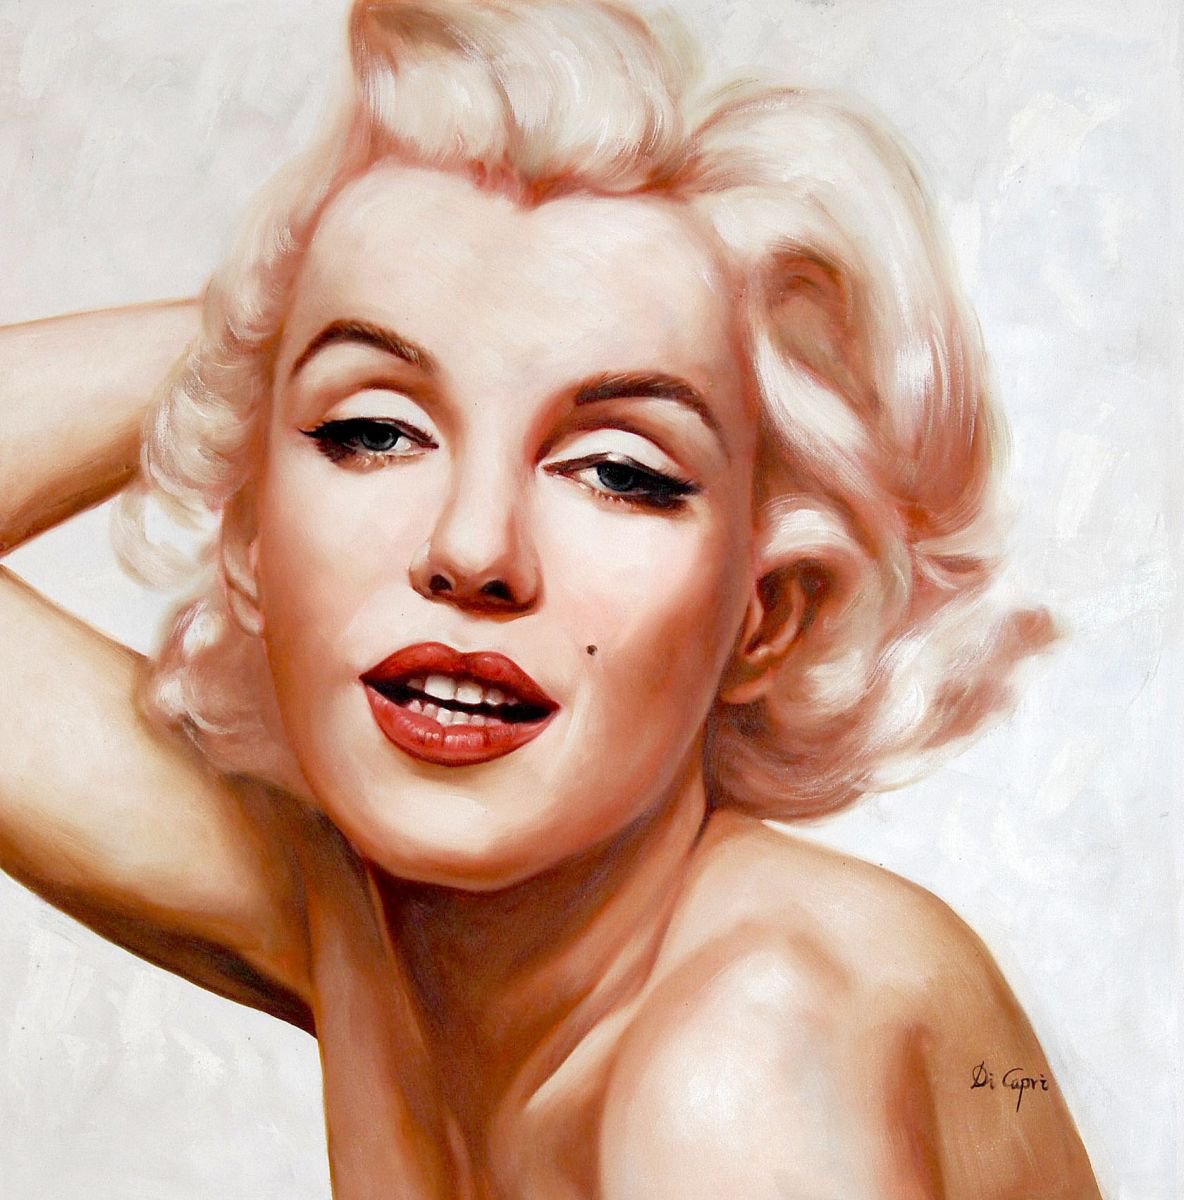 Marilyn Monroe Portrait -The Last Sitting-? By: Bert Stern by Di Capri